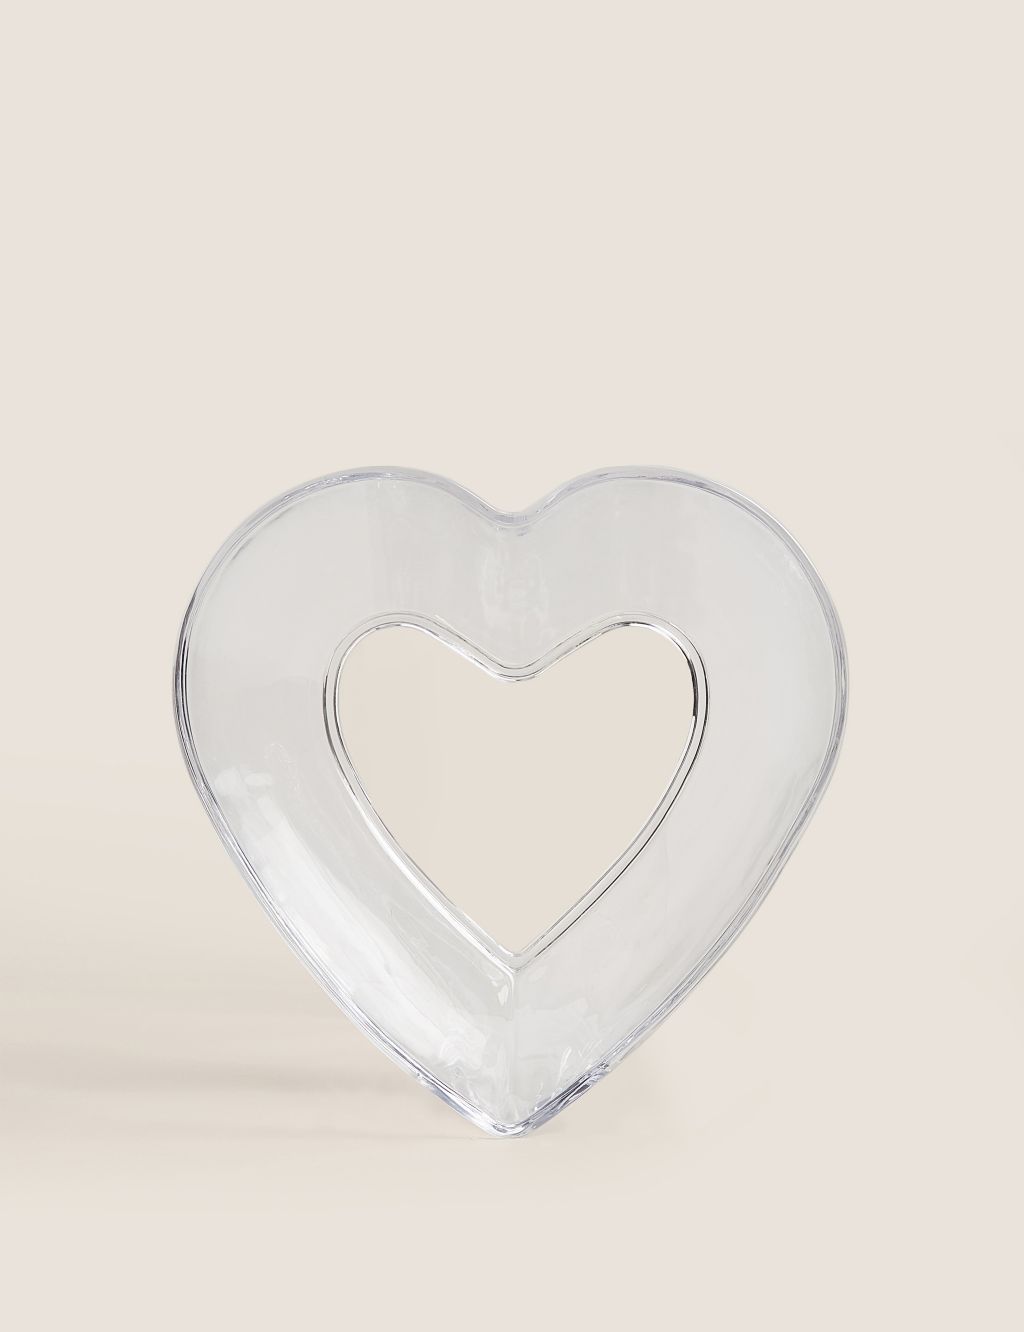 Medium Glass Heart Serving Bowl image 4